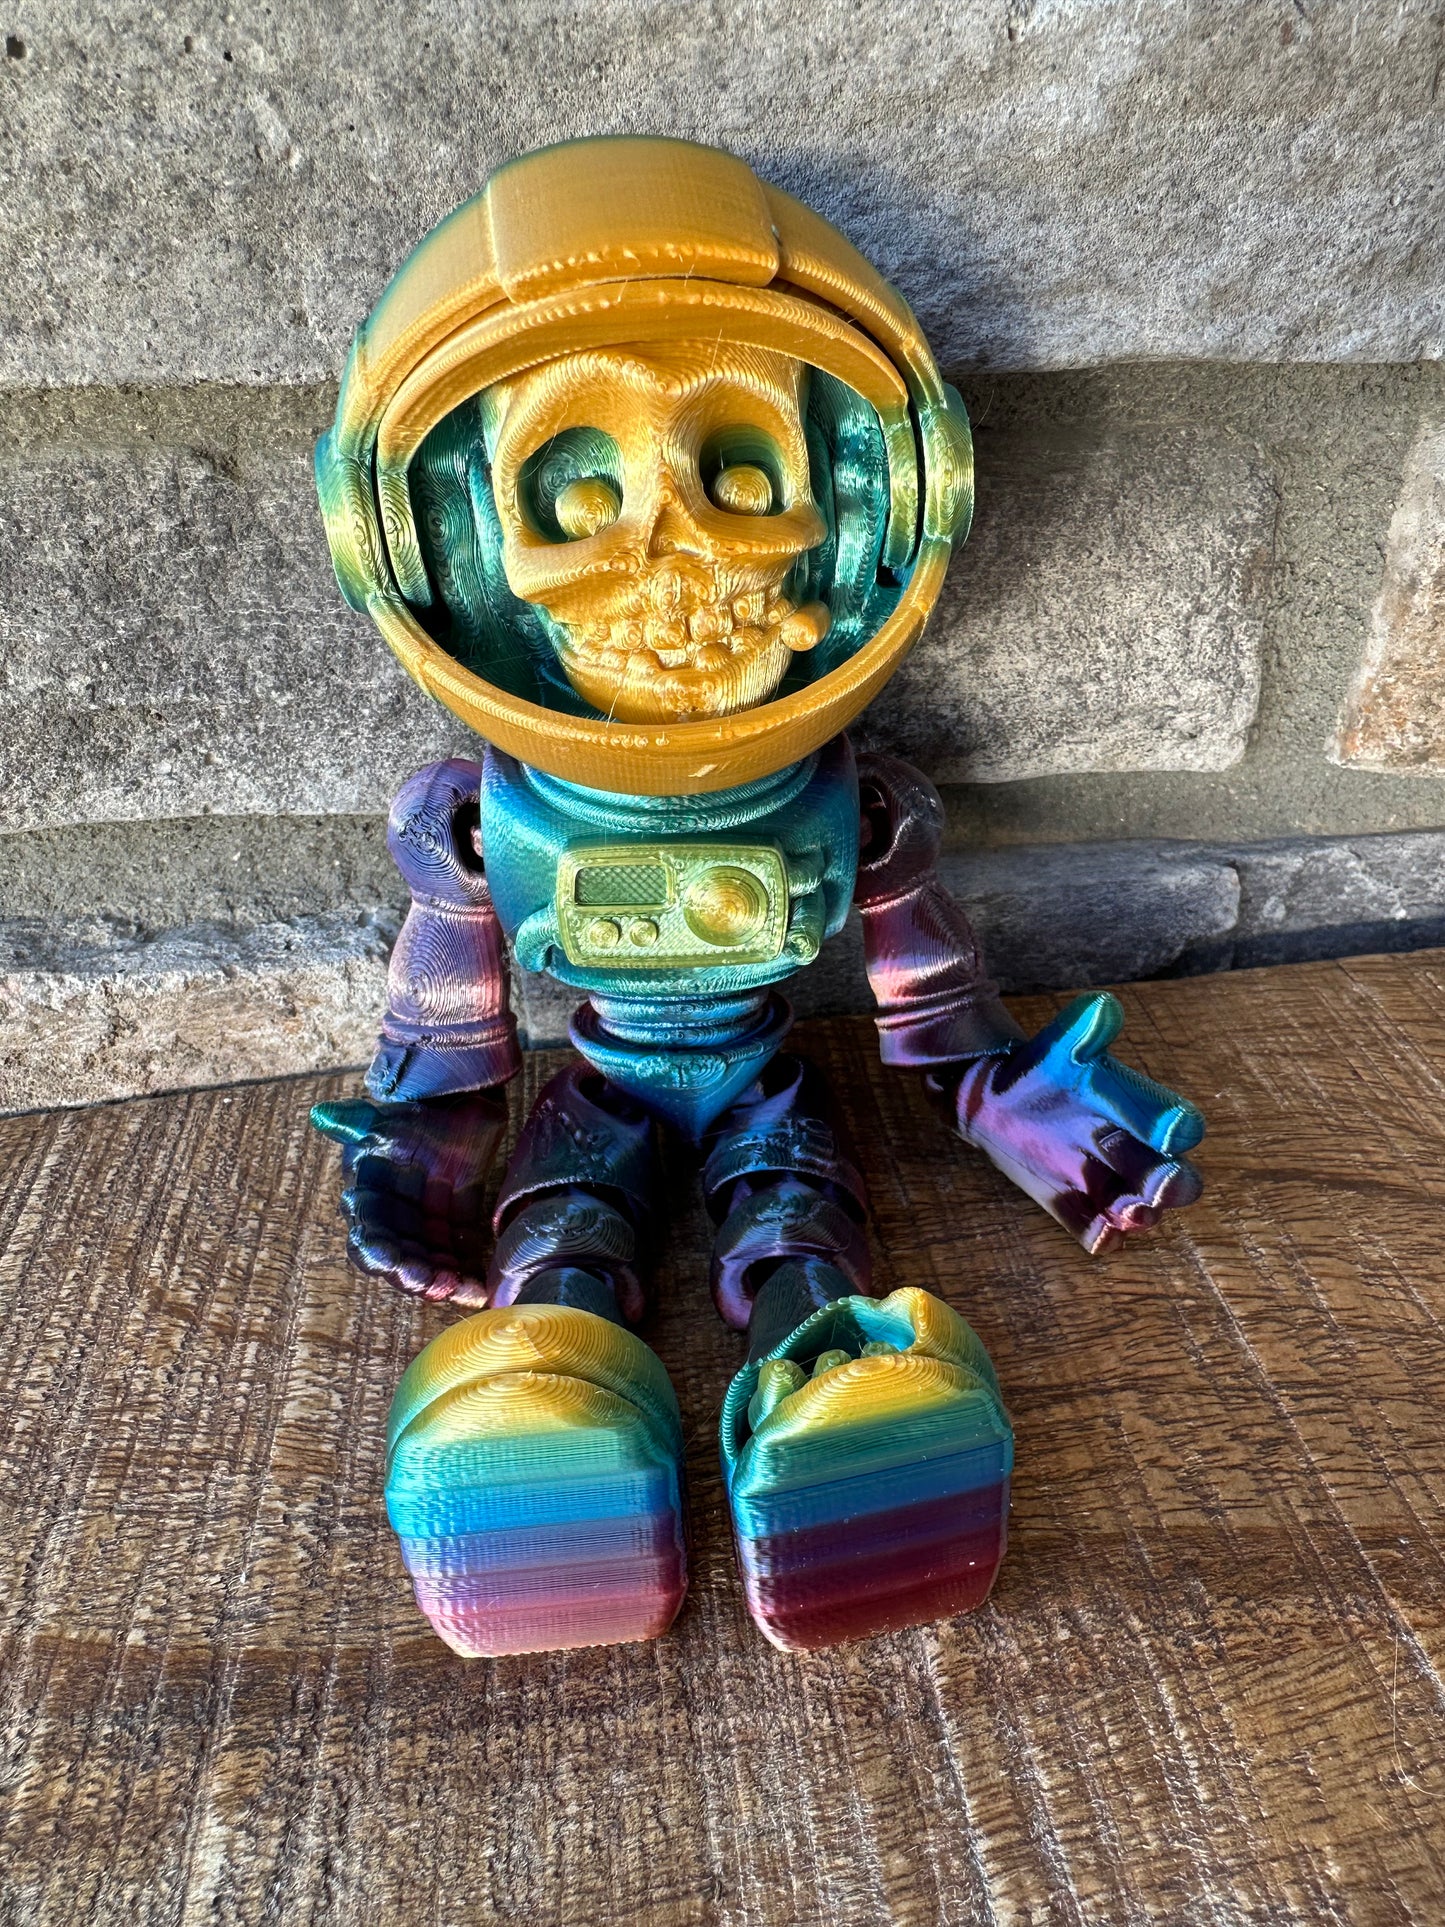 Zombie Astronaut | 3D Printed | Articulated Flexible | Custom Fidget Toy | Halloween Decoration